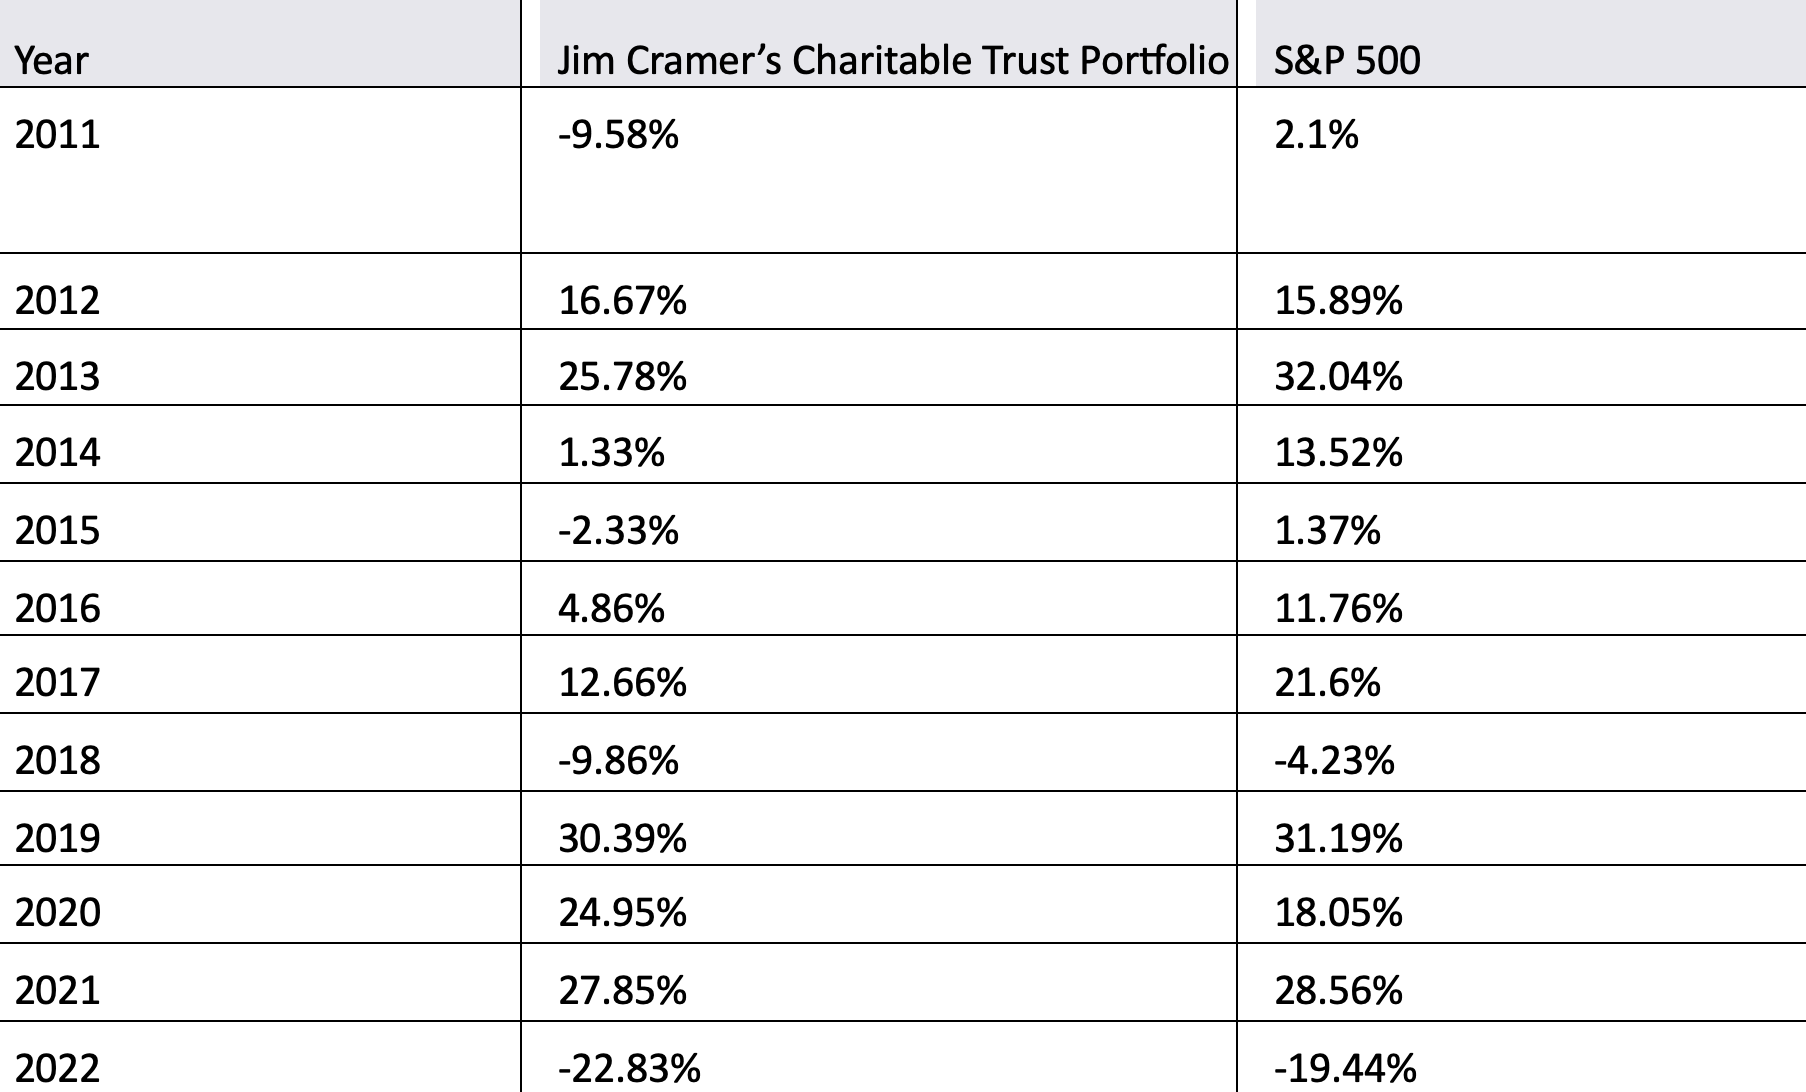 Jim Cramer's Charitable Trust Portfolio vs. S&P 500, 2011 to 2022